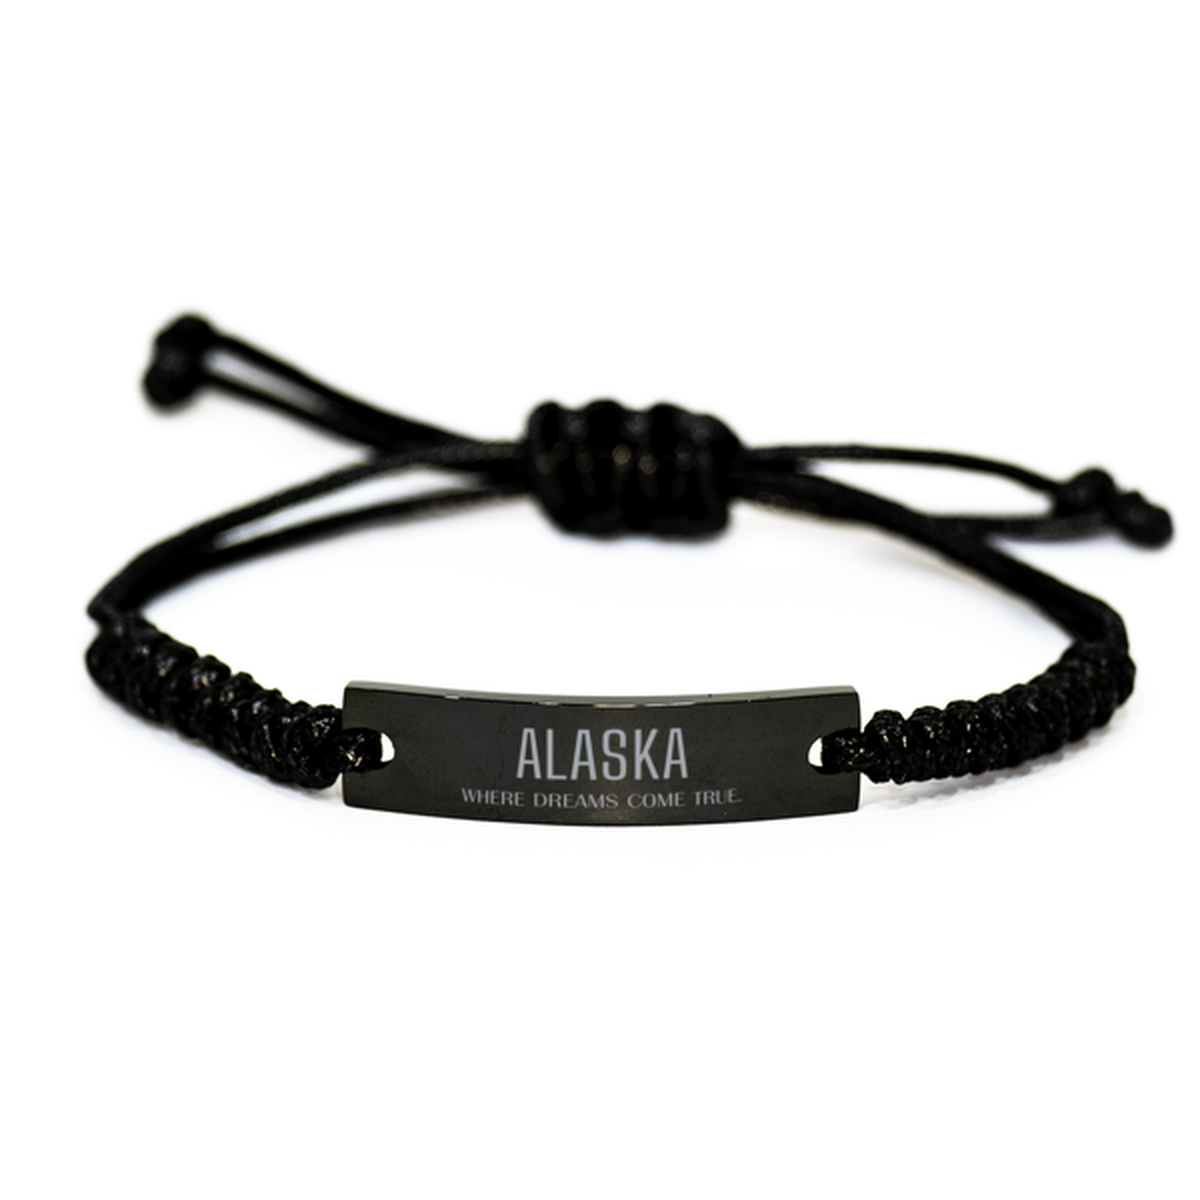 Love Alaska State Black Rope Bracelet, Alaska Where dreams come true, Birthday Inspirational Gifts For Alaska Men, Women, Friends